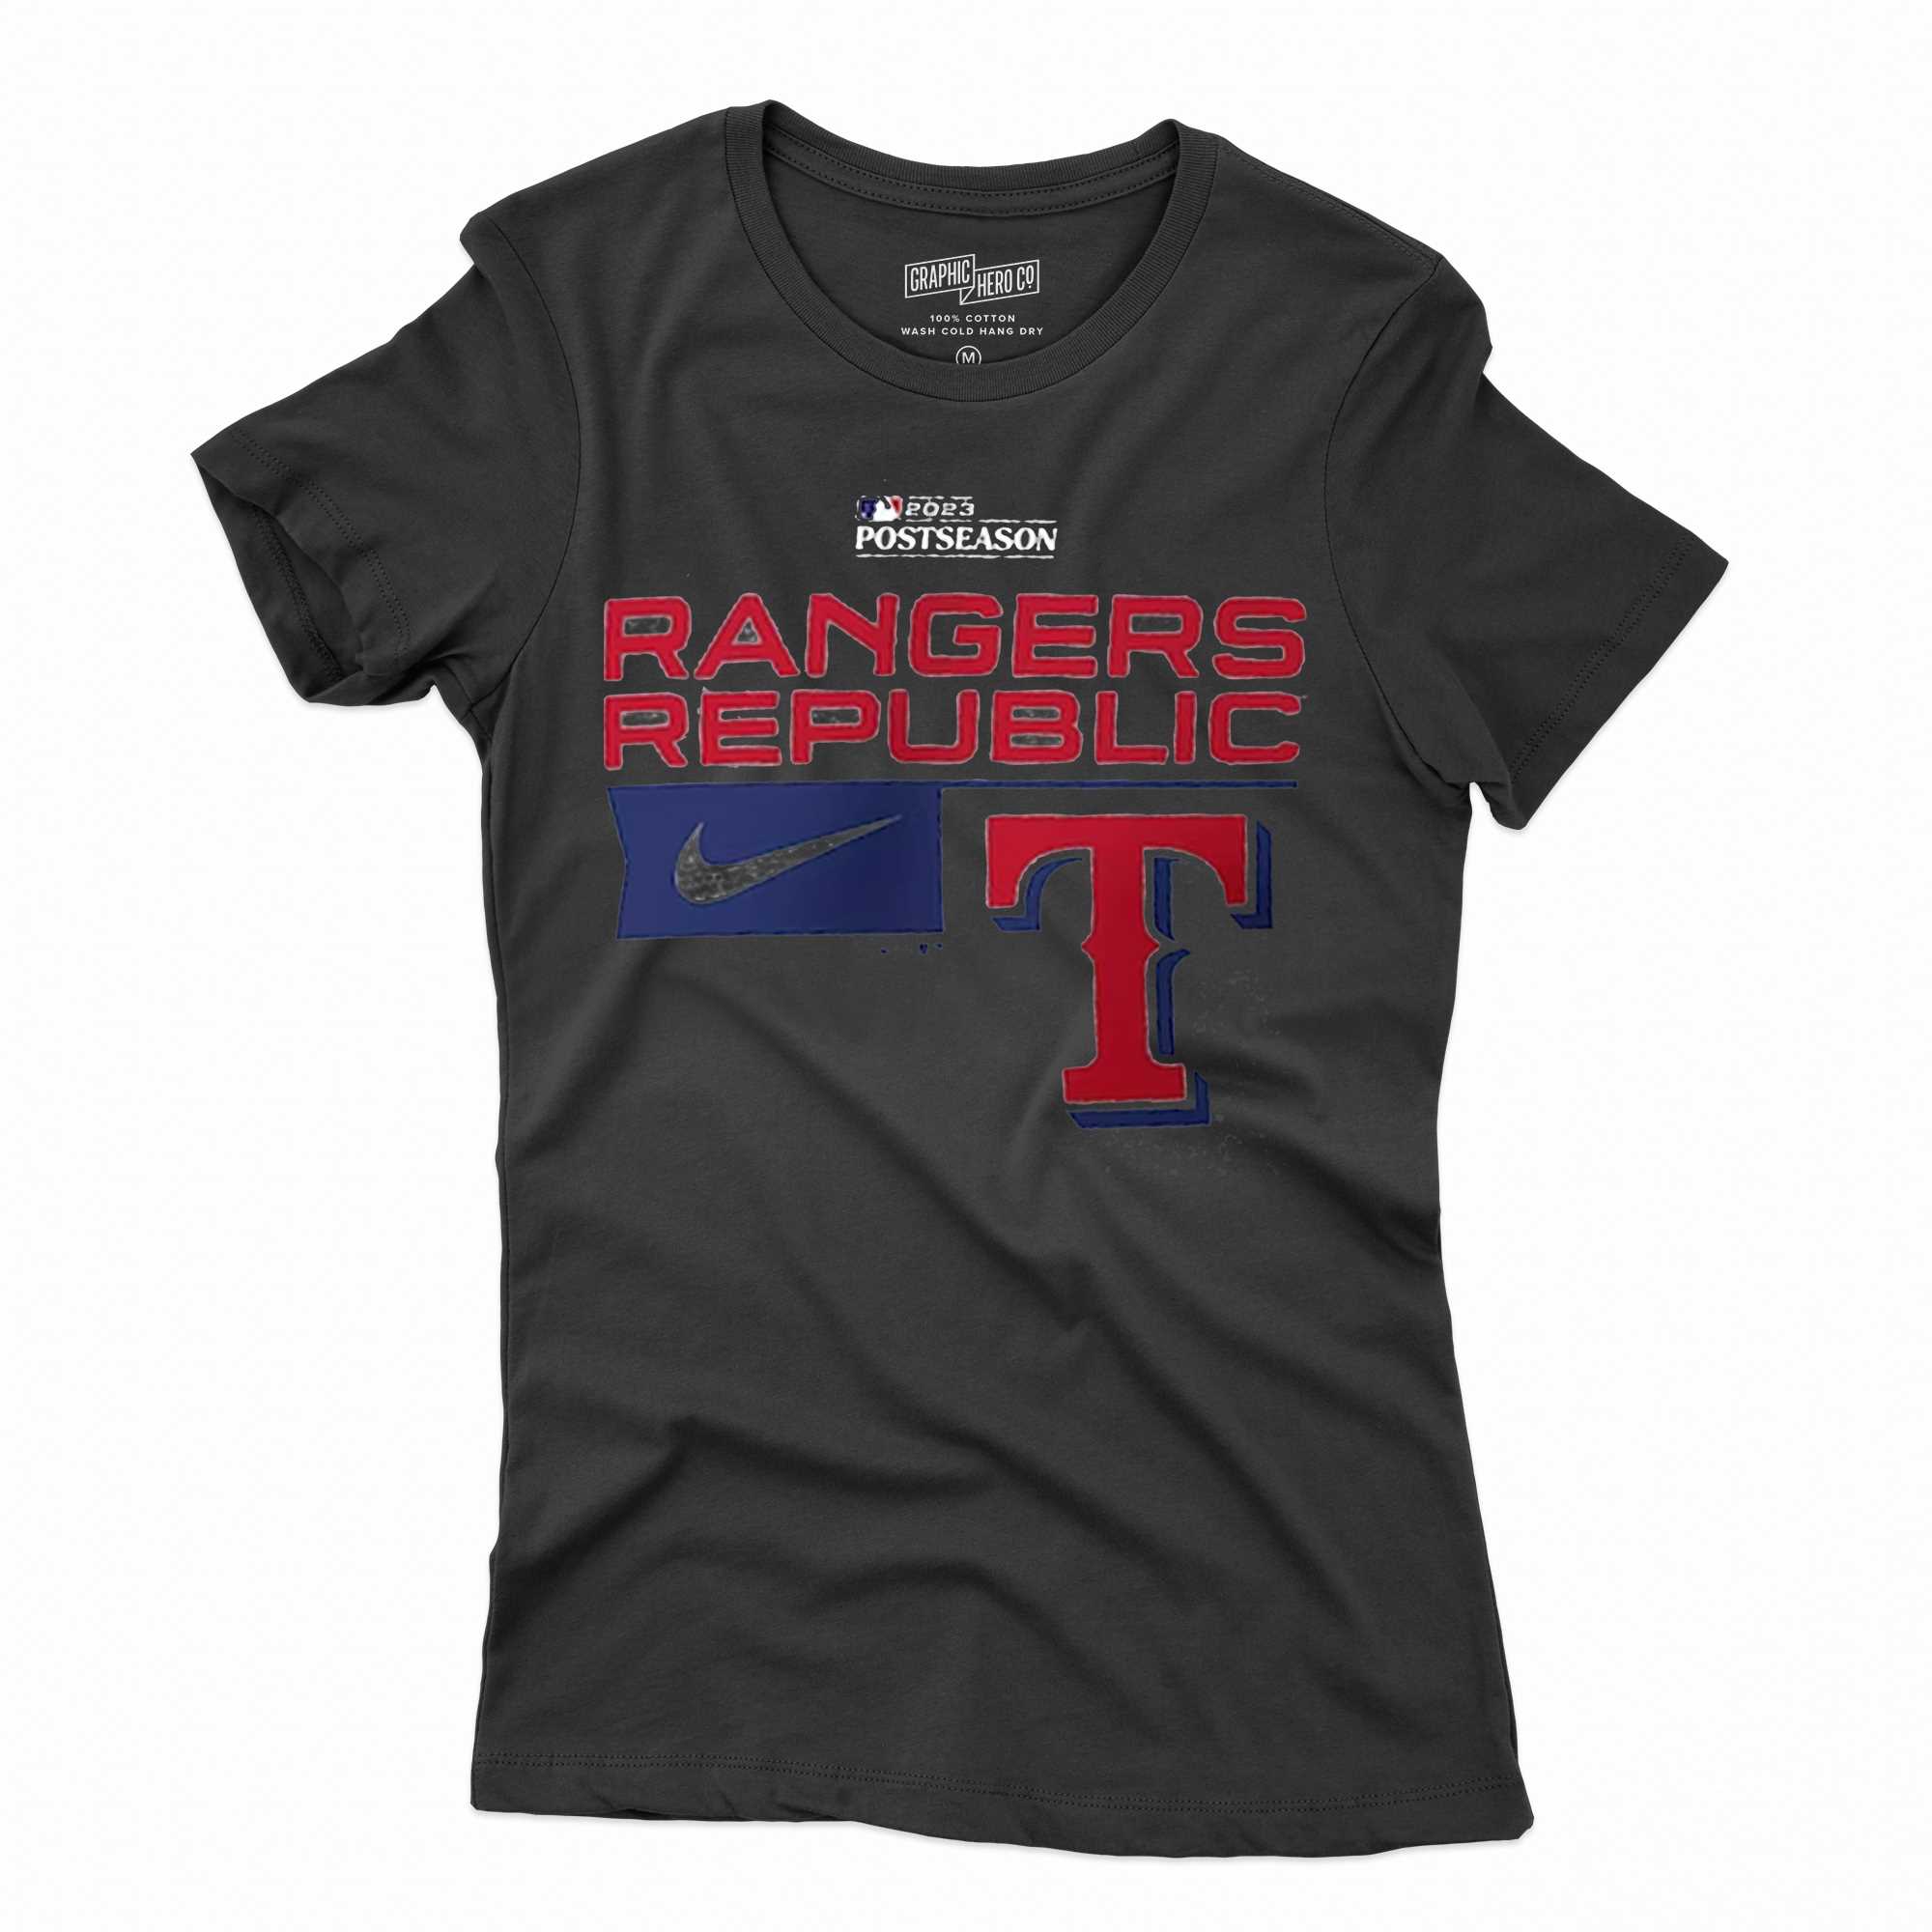 Nike Texas Rangers Womens Blue Dry V Short Sleeve T-Shirt  Gaming clothes, Texas  rangers t shirts, Texas rangers shirts